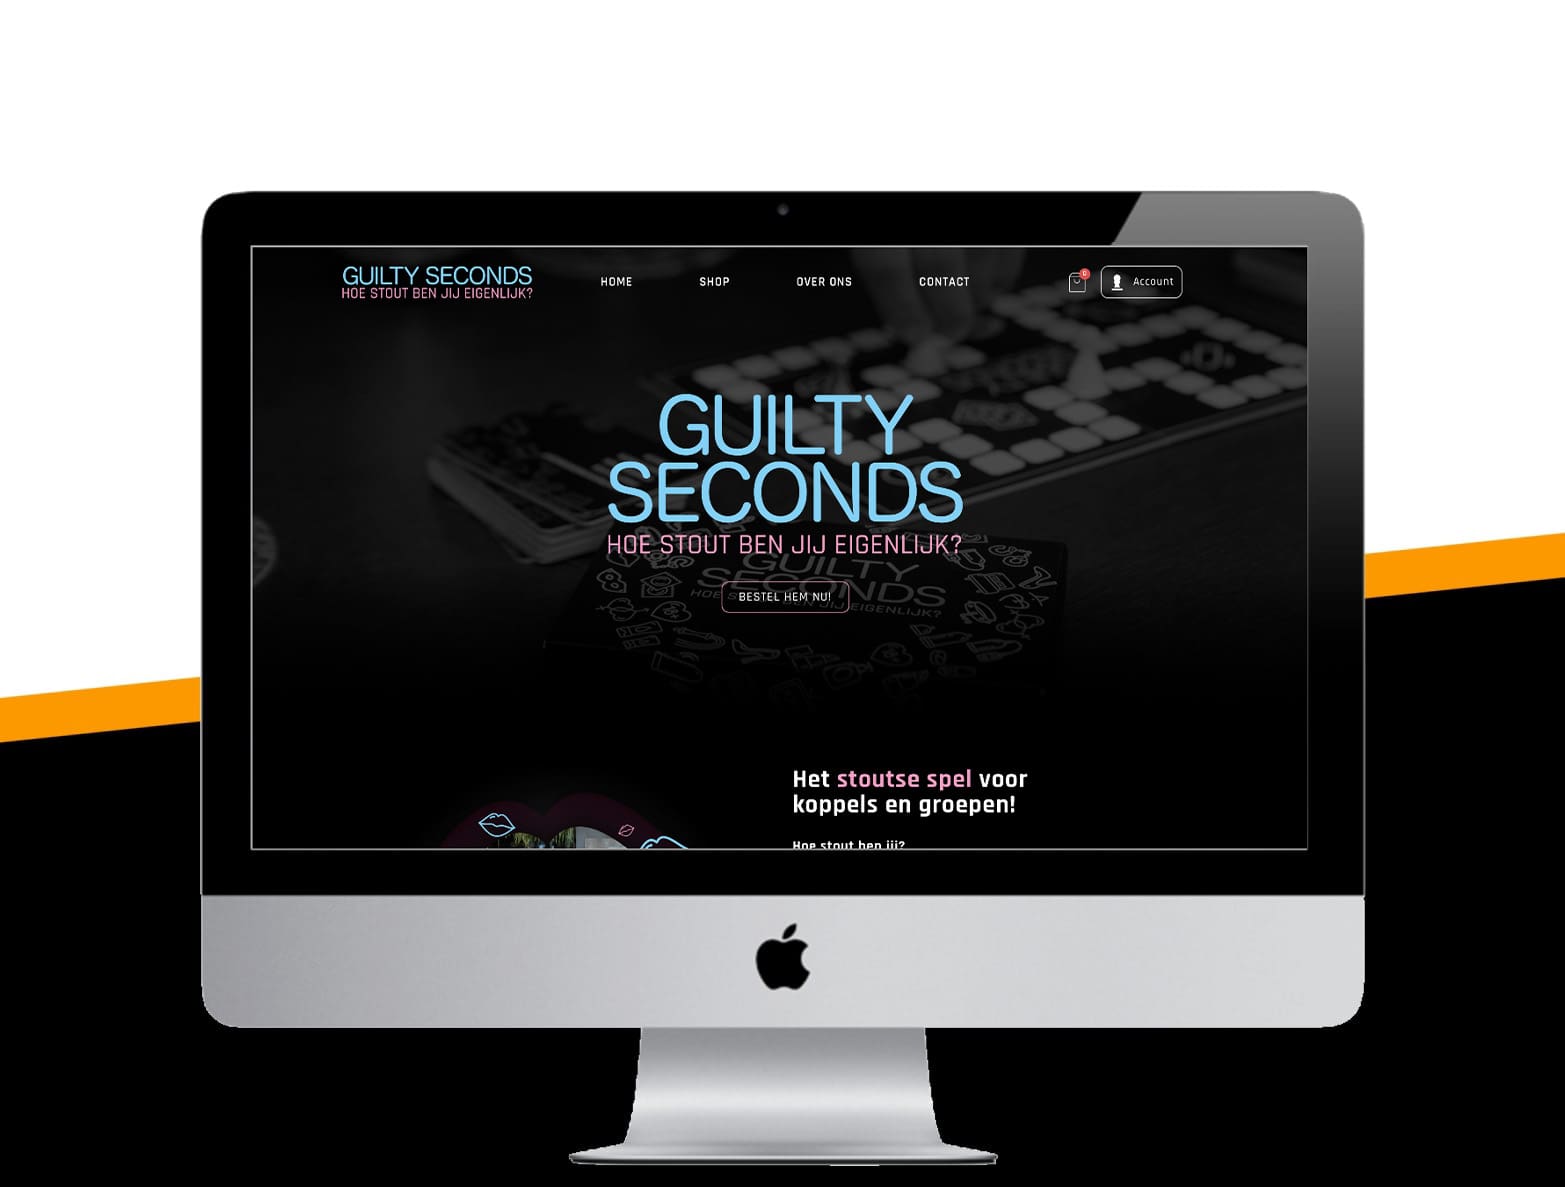 Guilty seconds | marv-websolutions